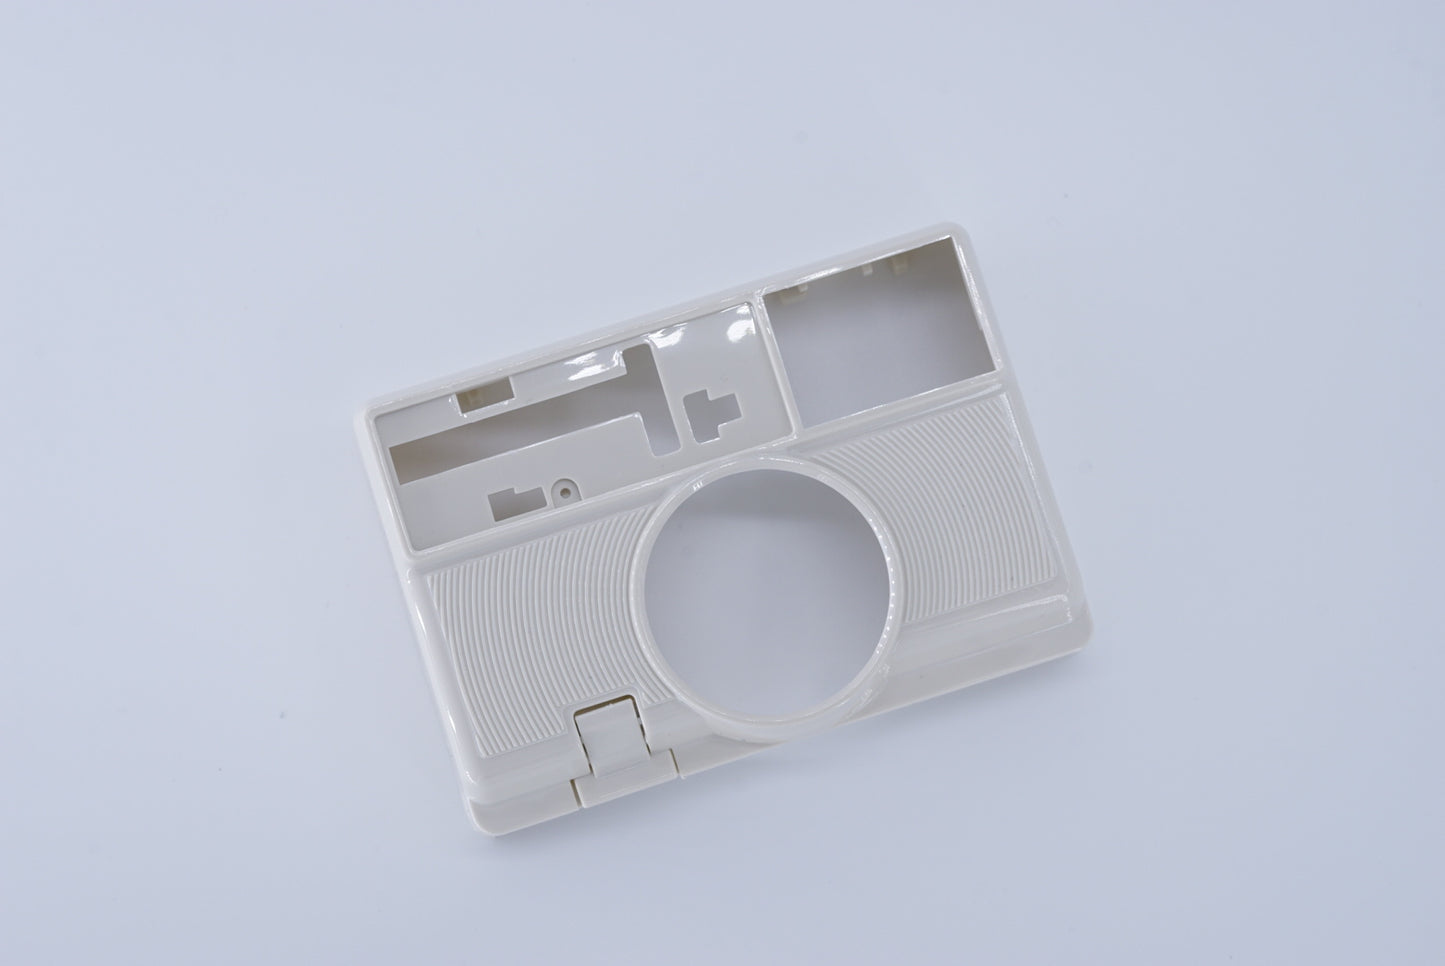 Polaroid Camera transparent cover 680/690 colorful